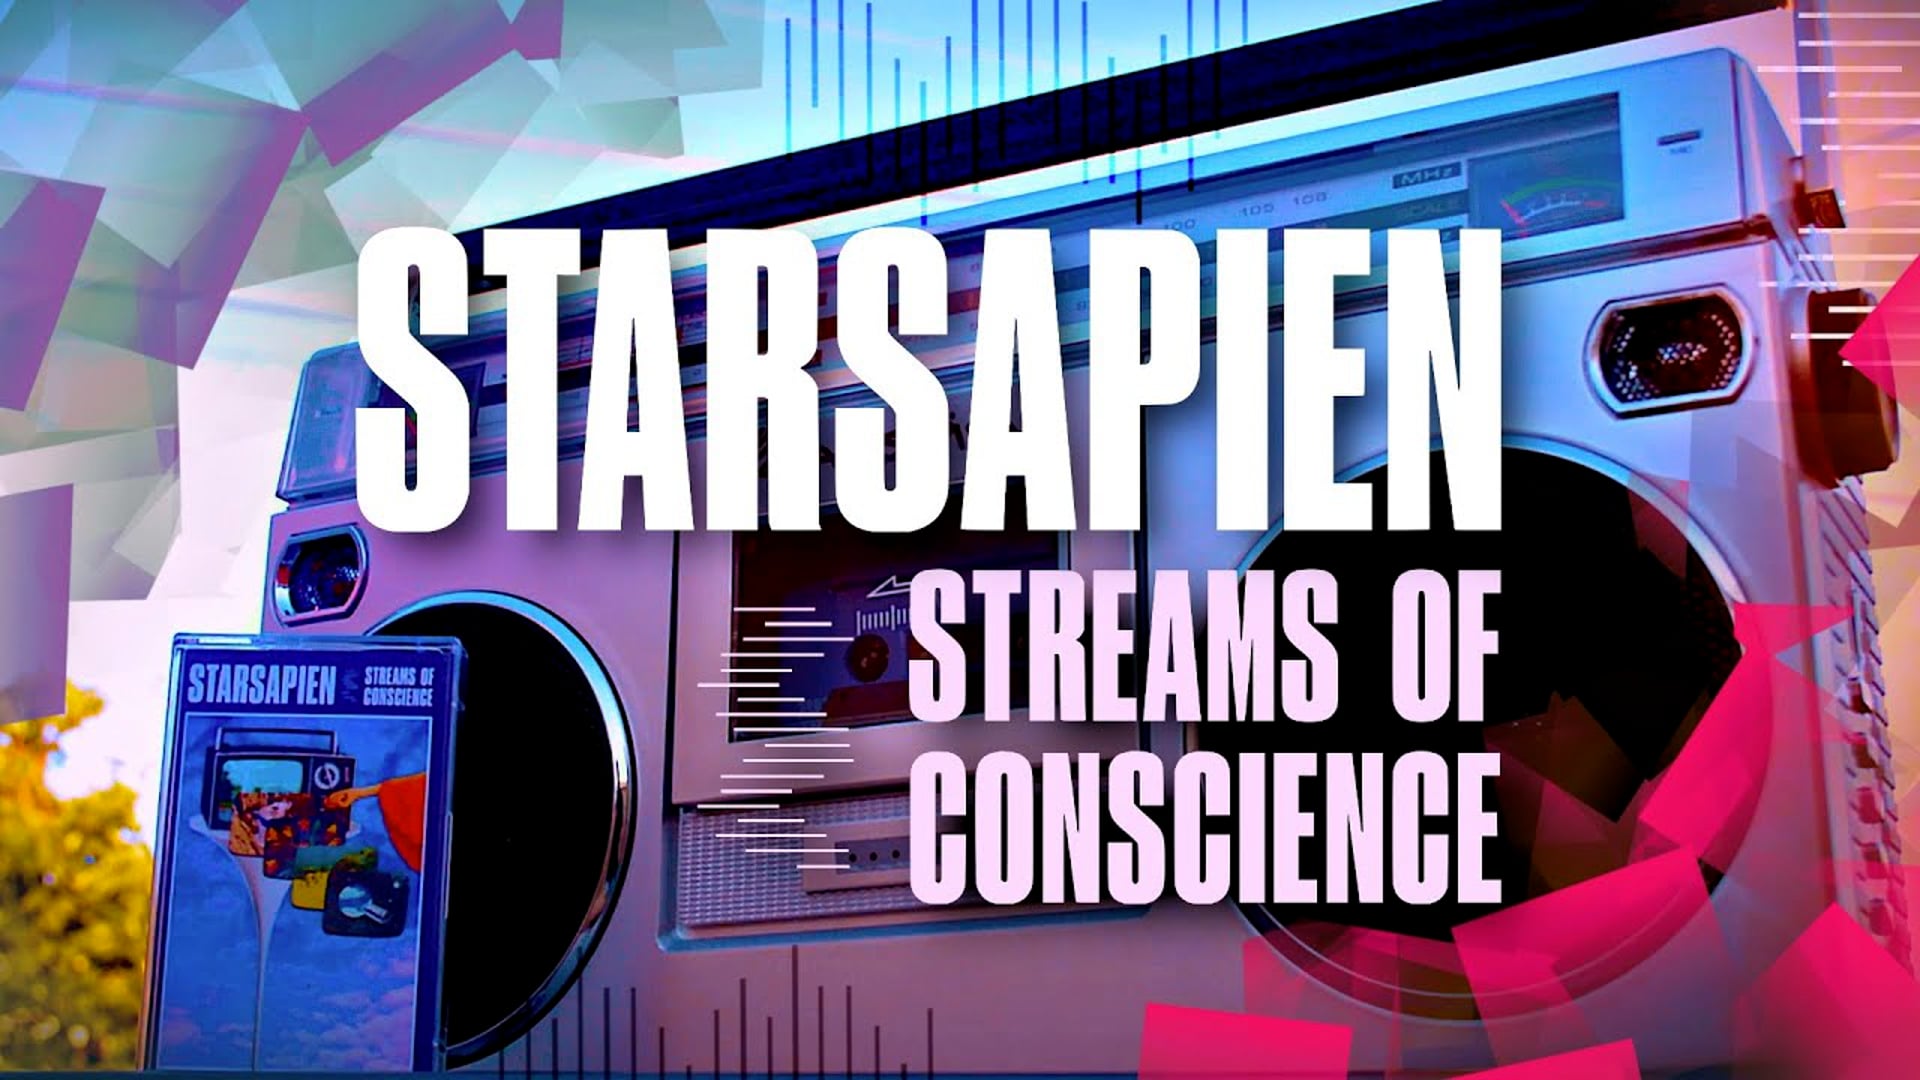 Starsapien - Streams of Conscience [FULL ALBUM]